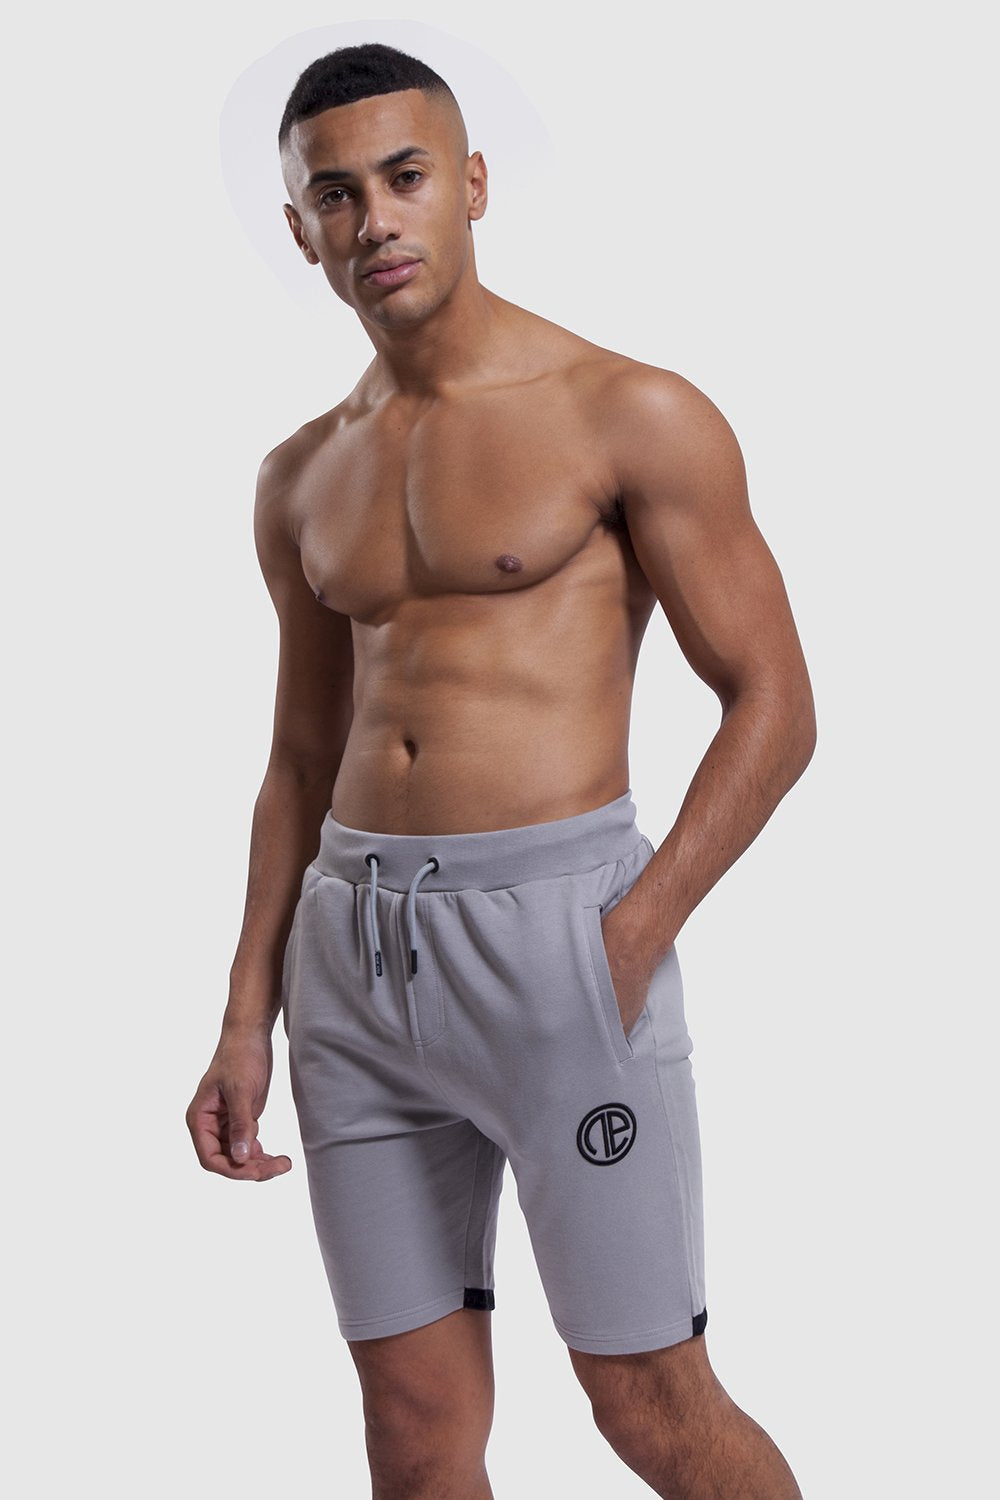 mens gym shorts in grey (One Athletic)